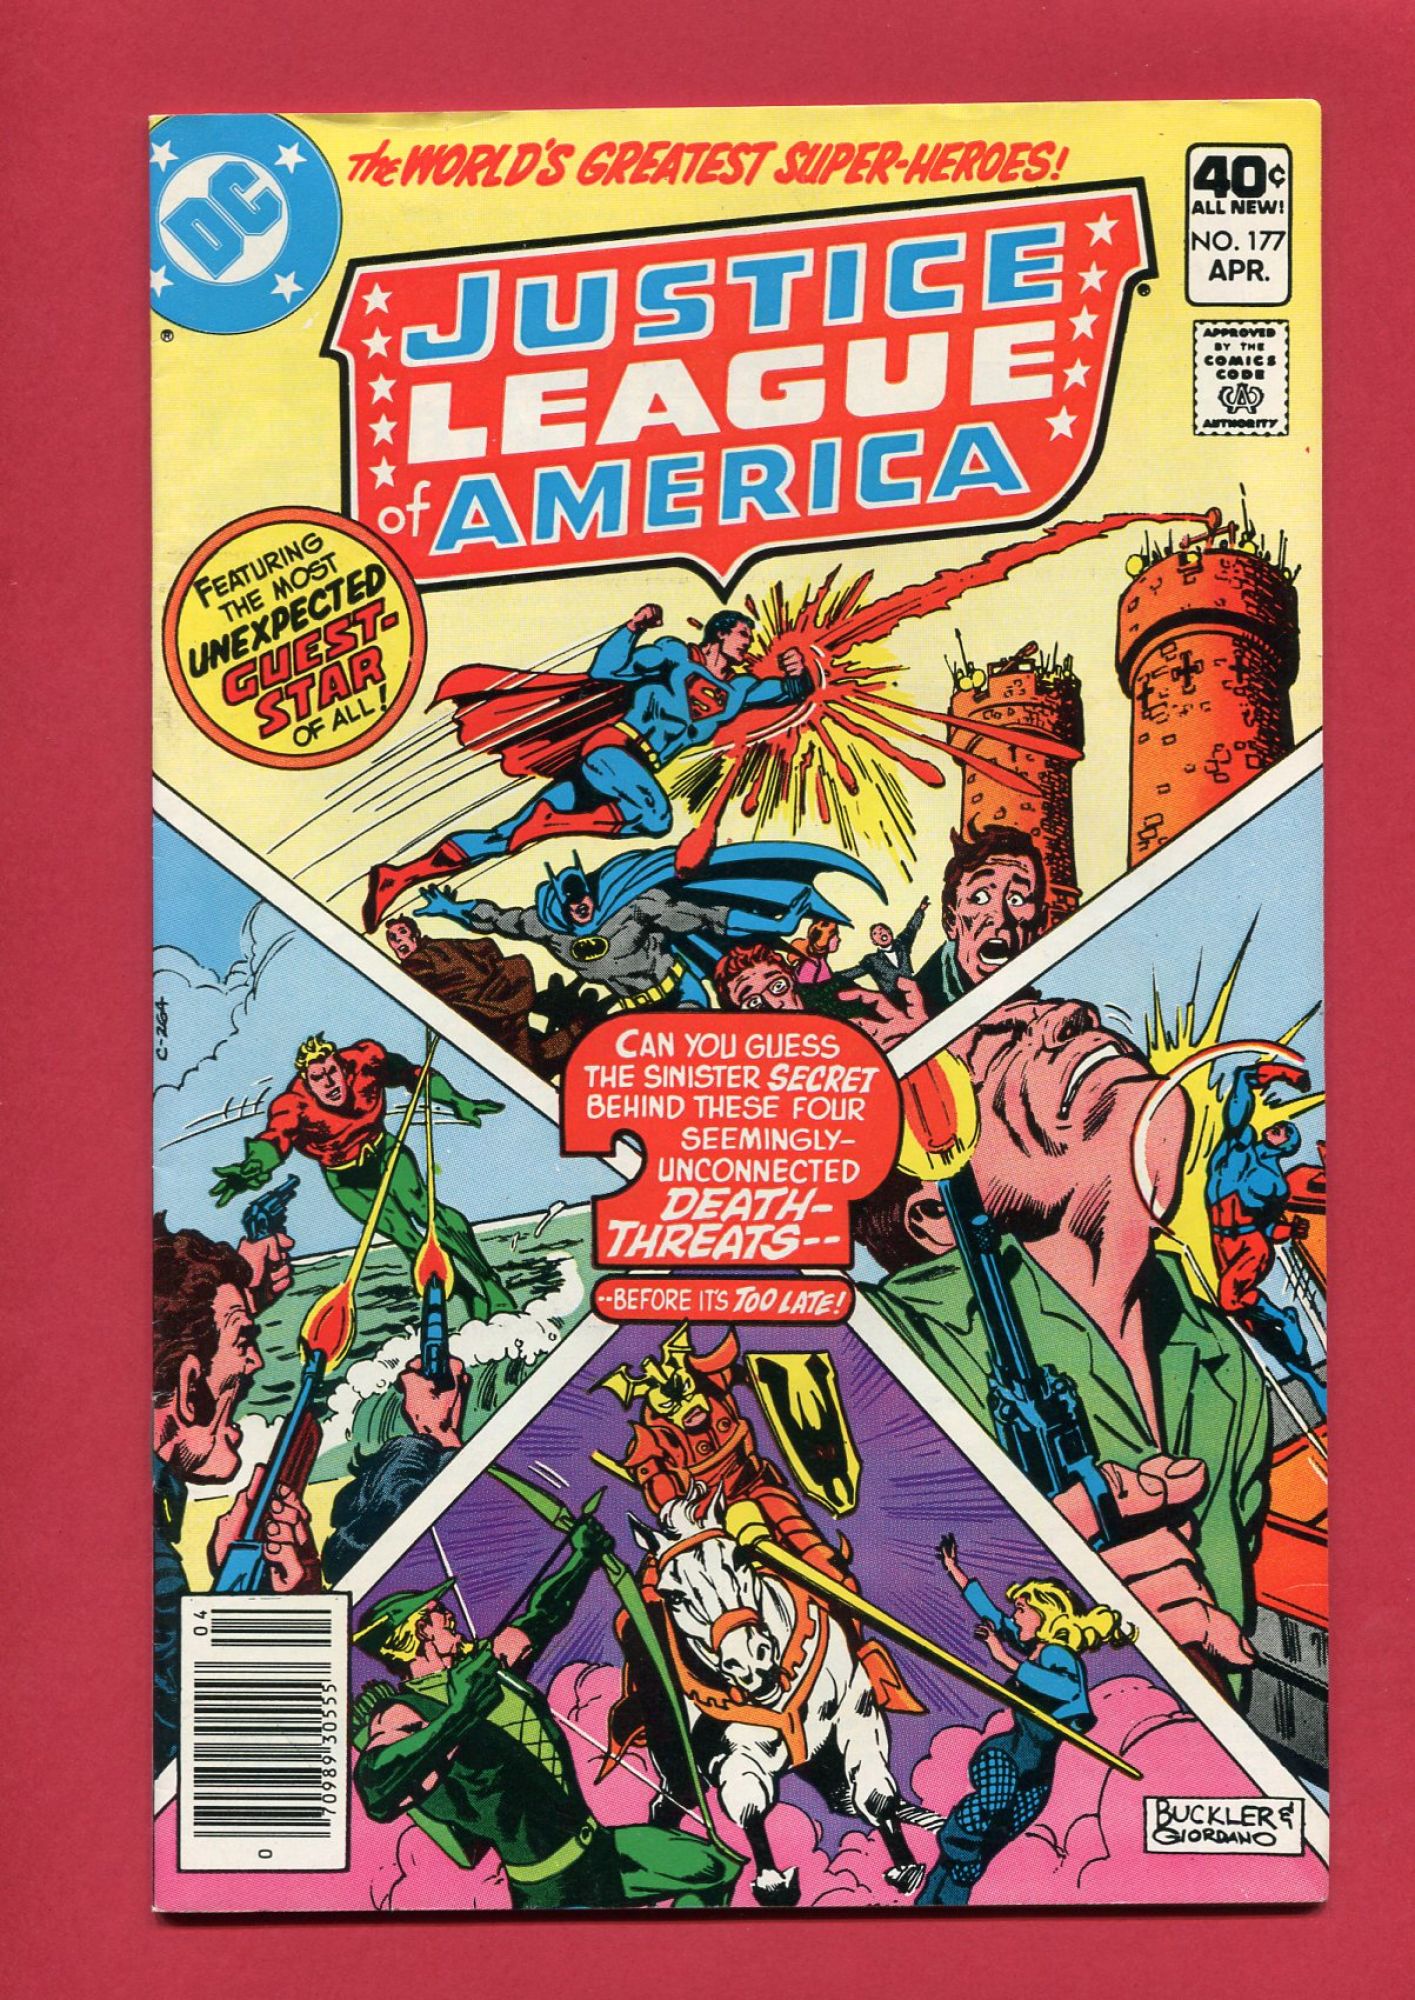 Justice League of America #177, Apr 1980, 8.0 VF